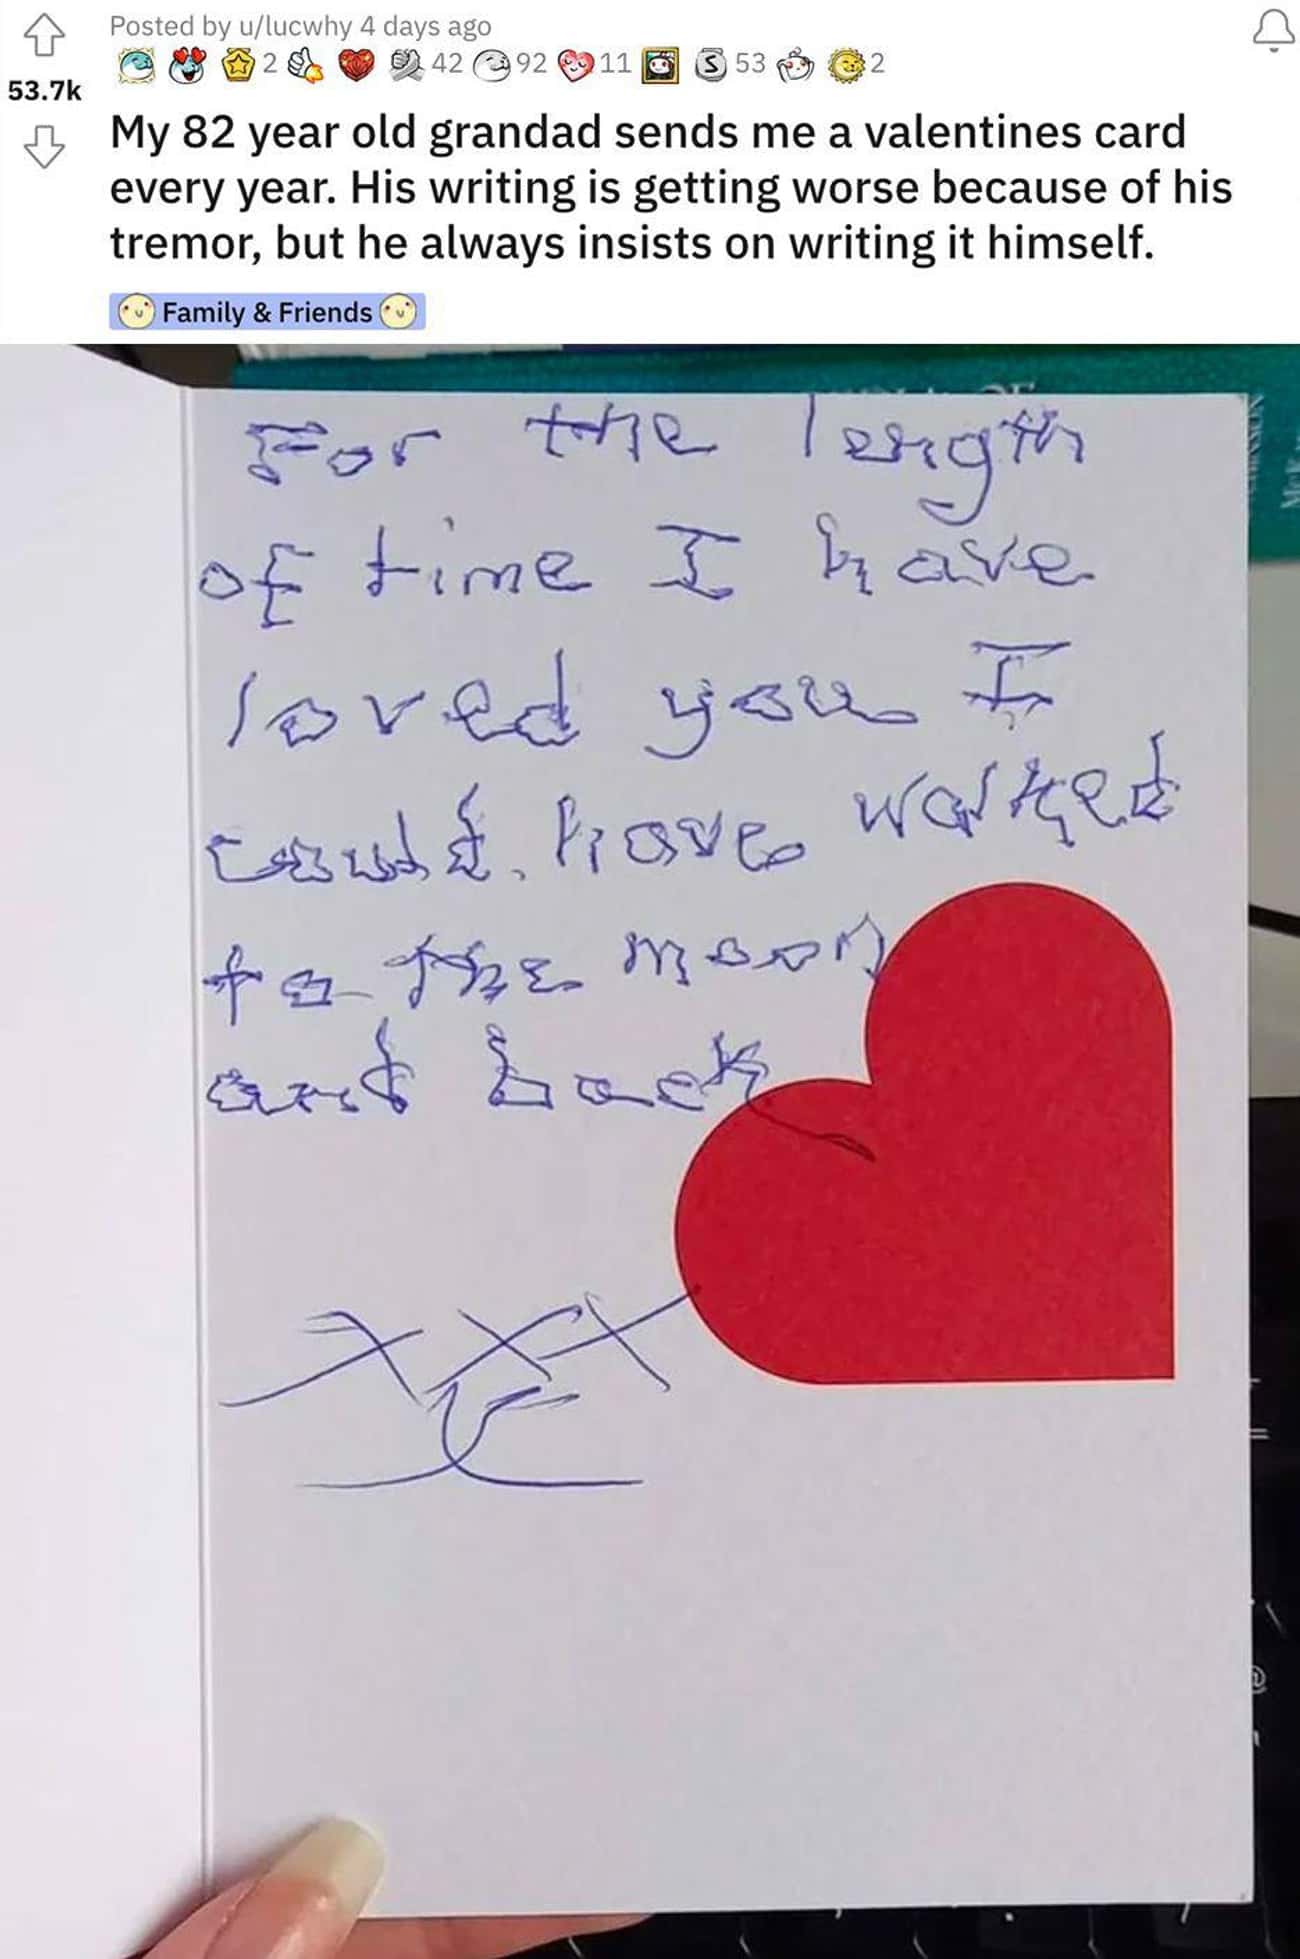 The Grandfather Still Sends The Handwritten Valentine's Day Card